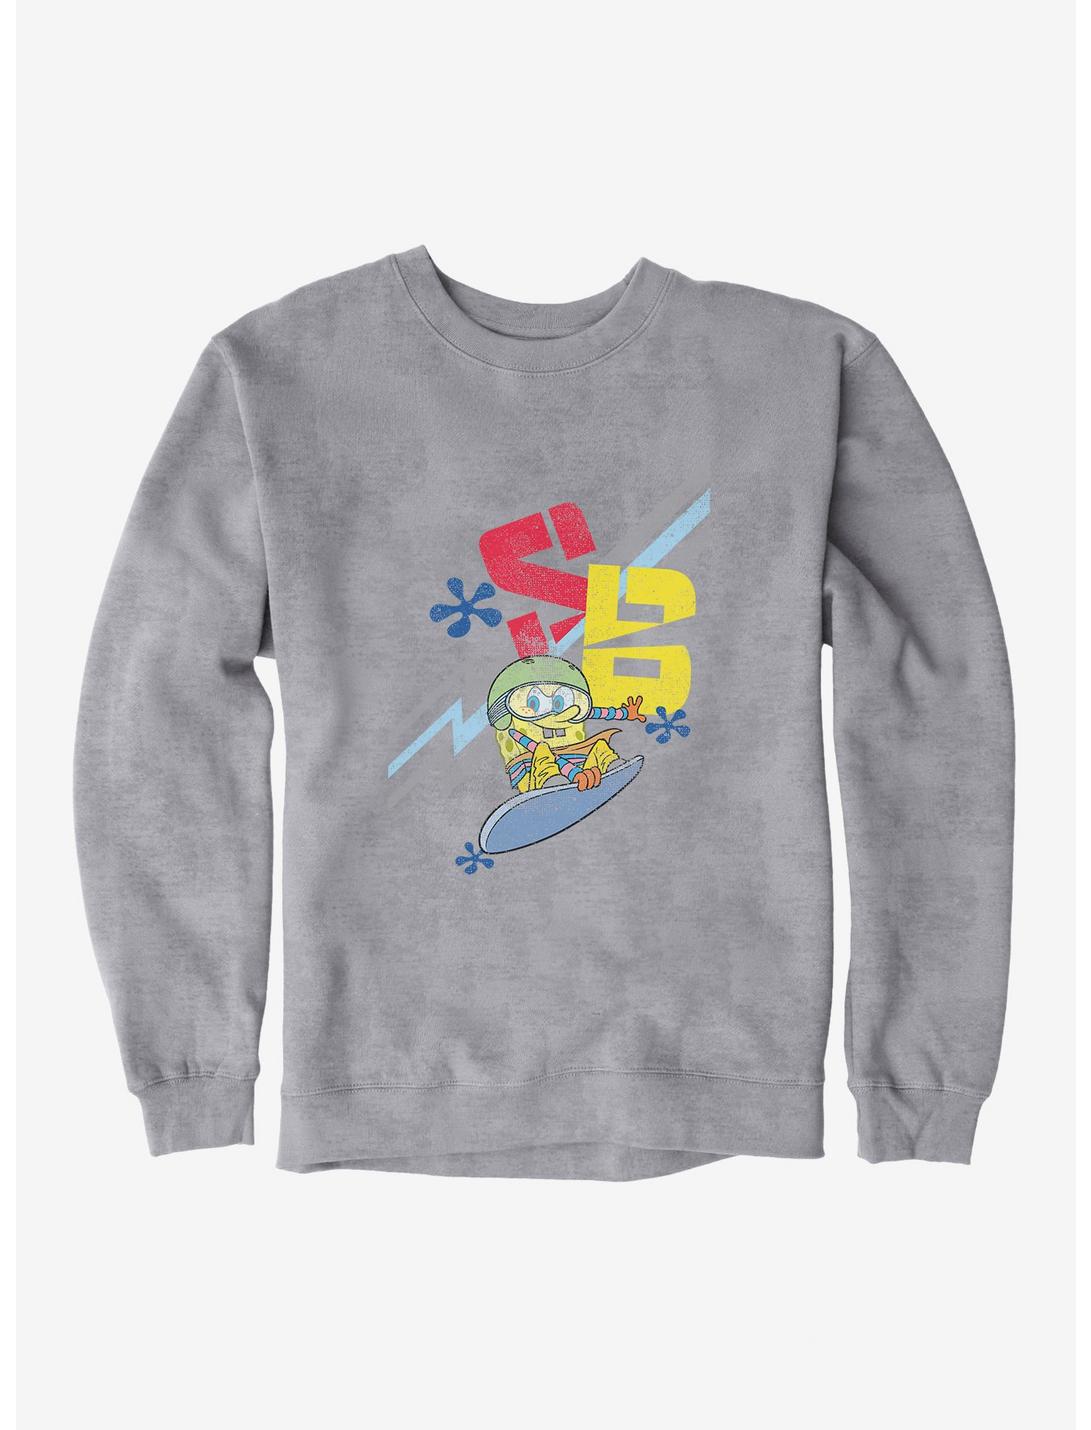 SpongeBob SquarePants Snowboarding Sweatshirt, HEATHER GREY, hi-res